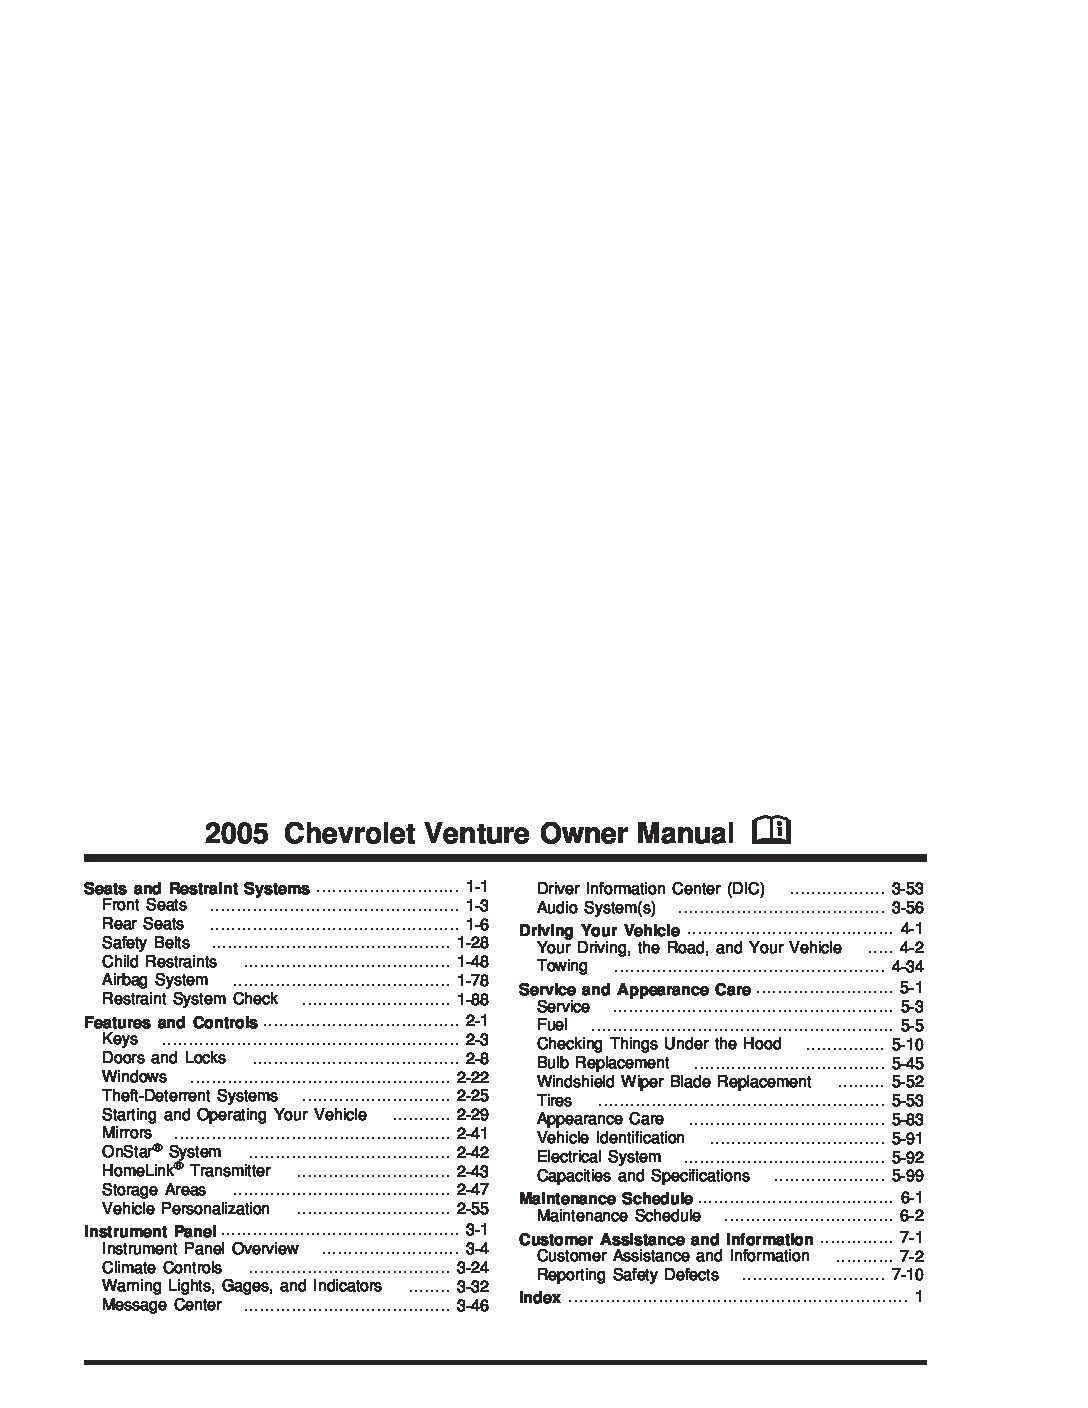 2005 Chevrolet Venture Image